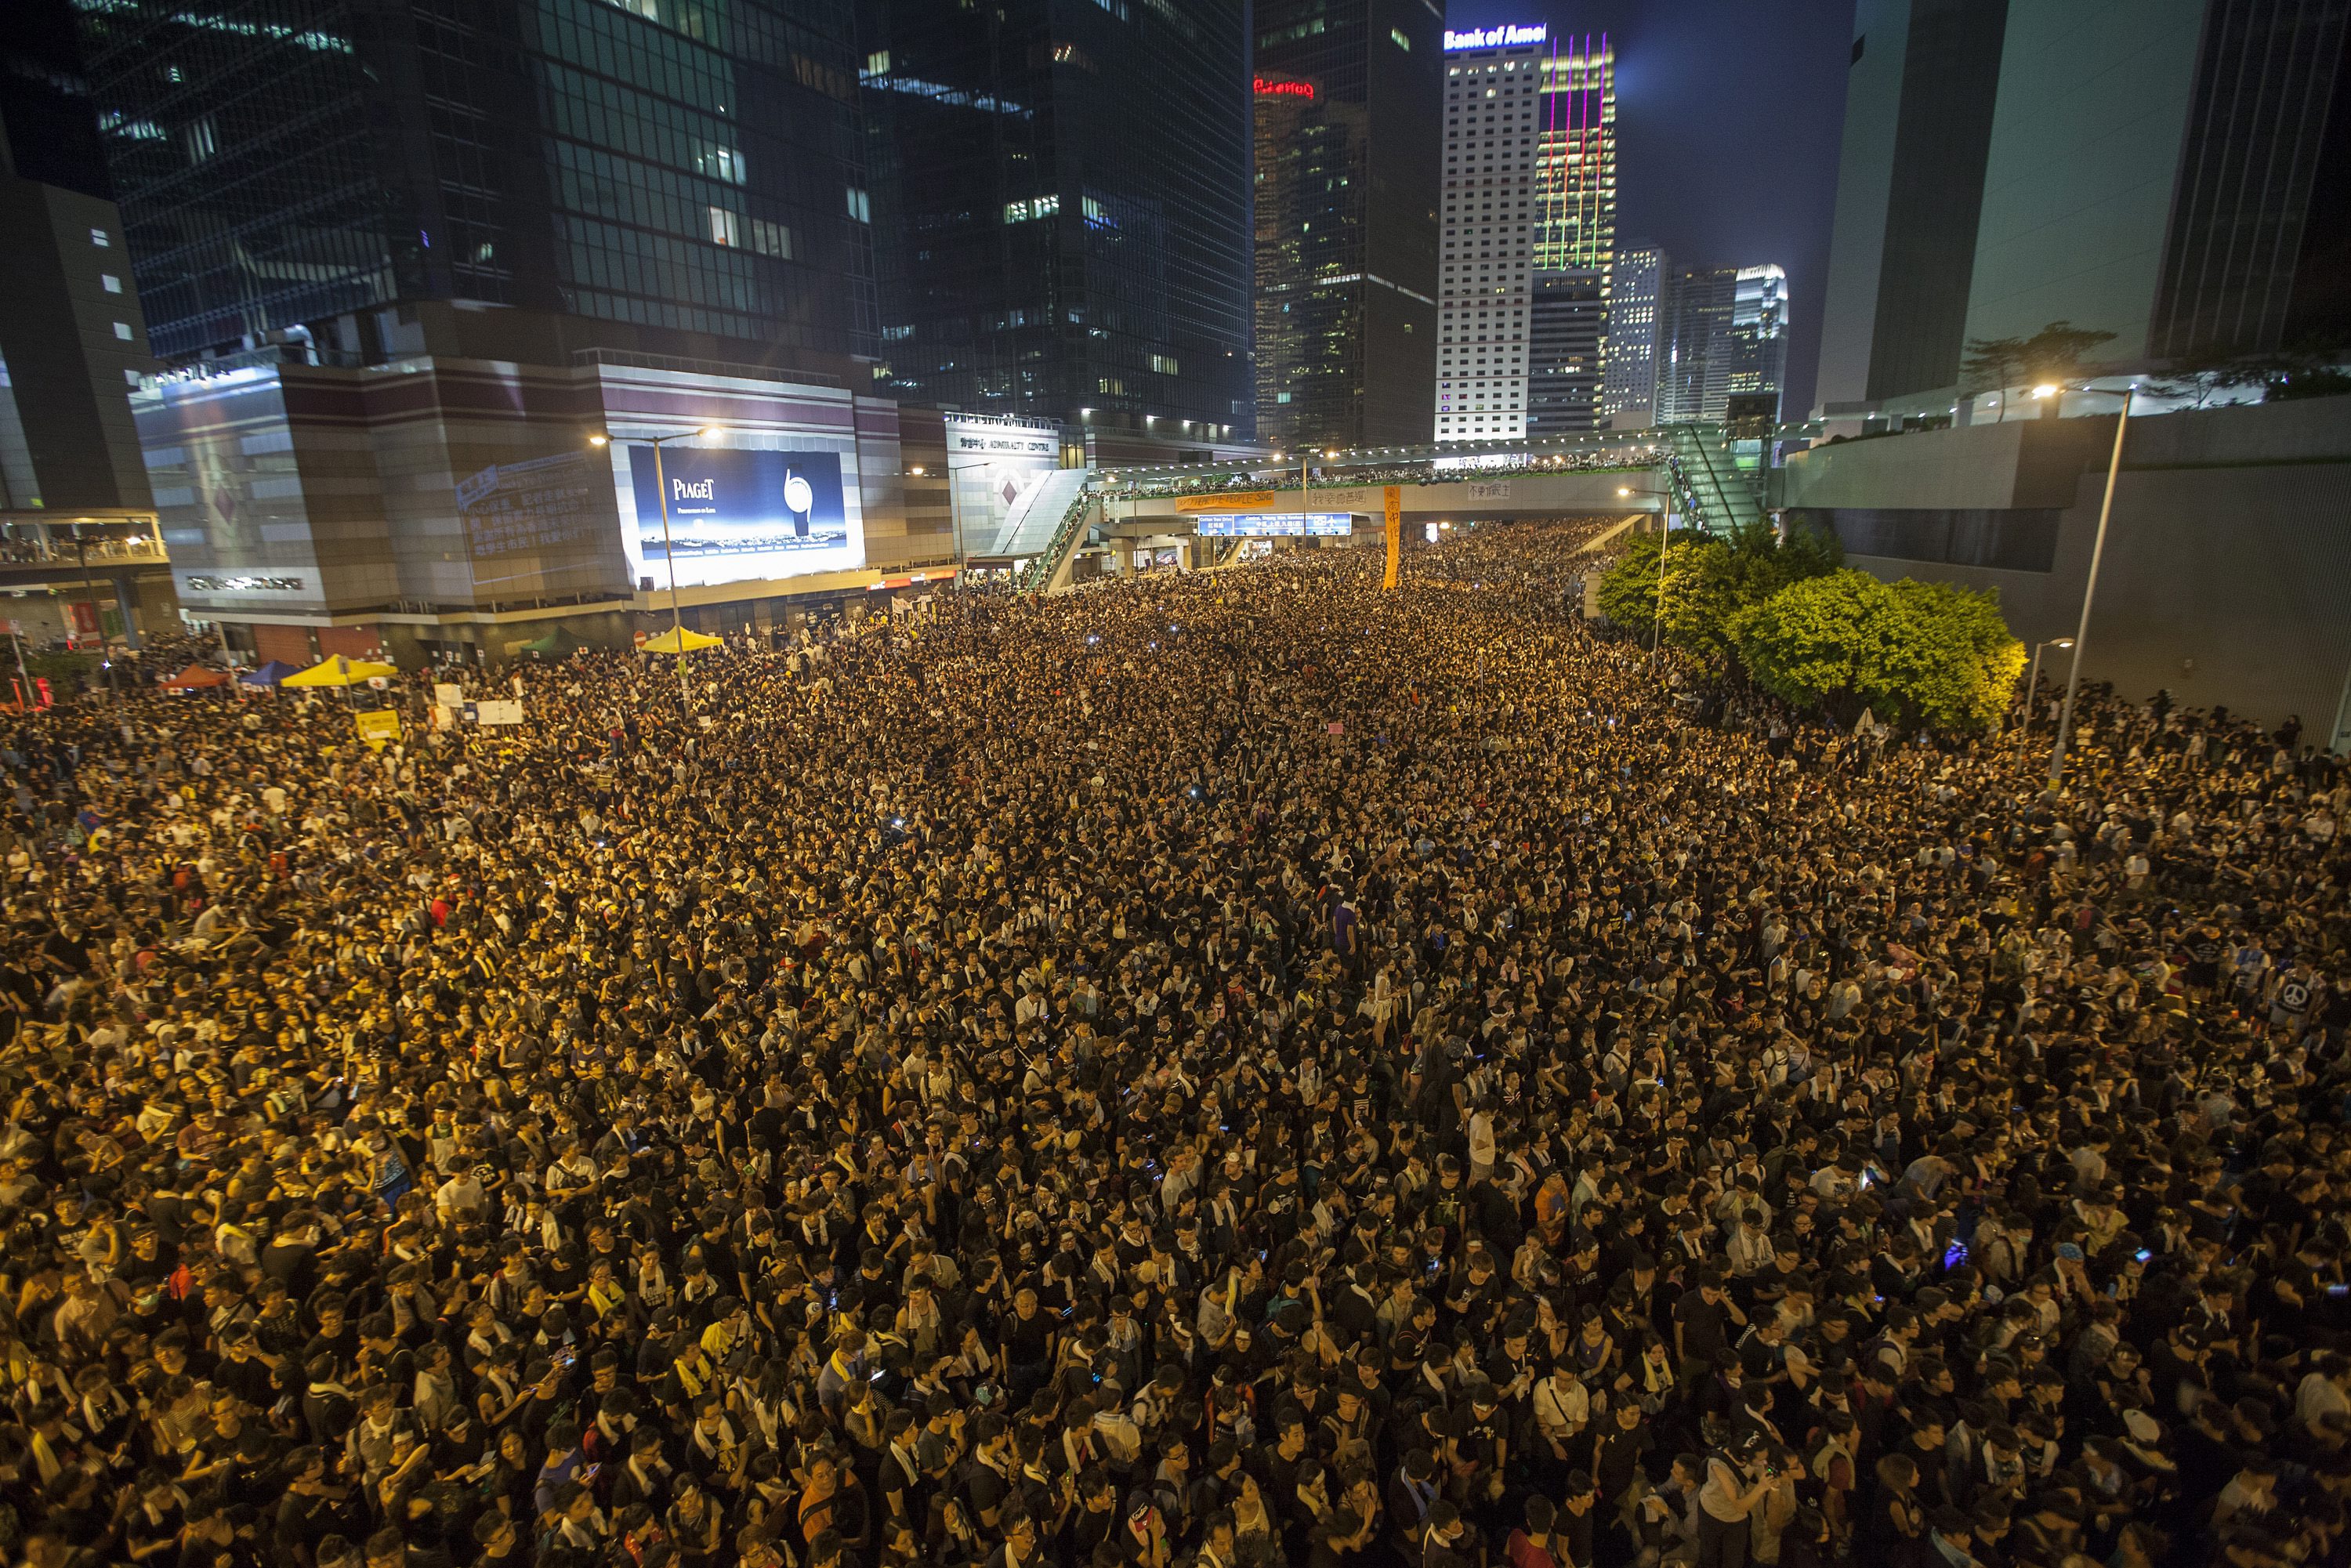 crowds-admiralty-second-night-epa.jpg